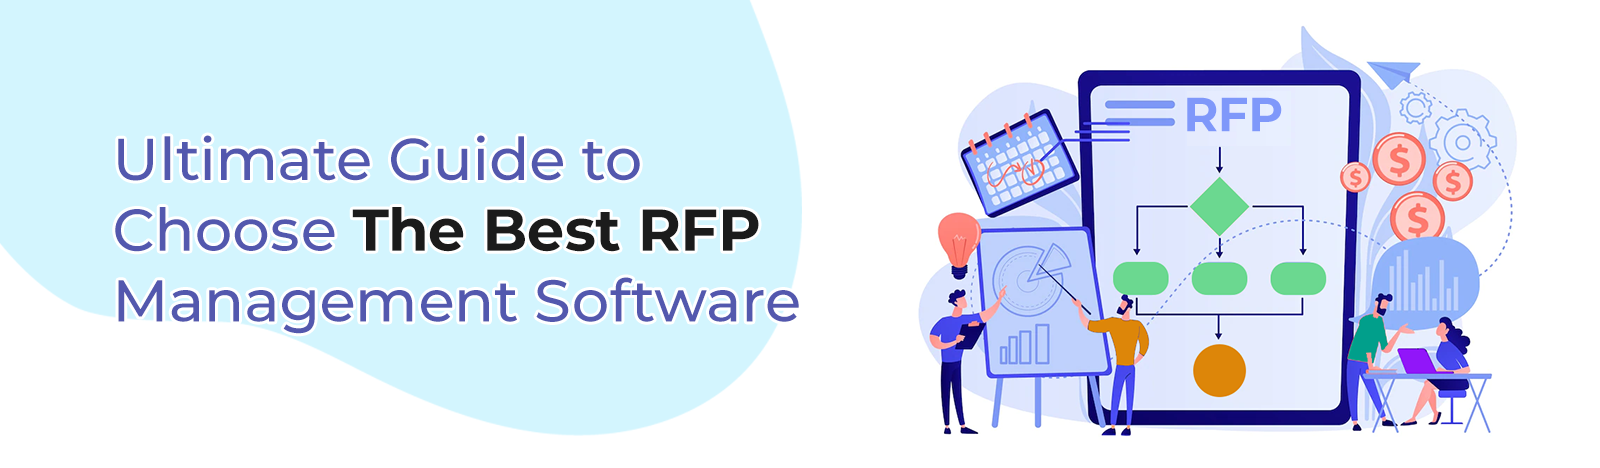 RFP Management Software